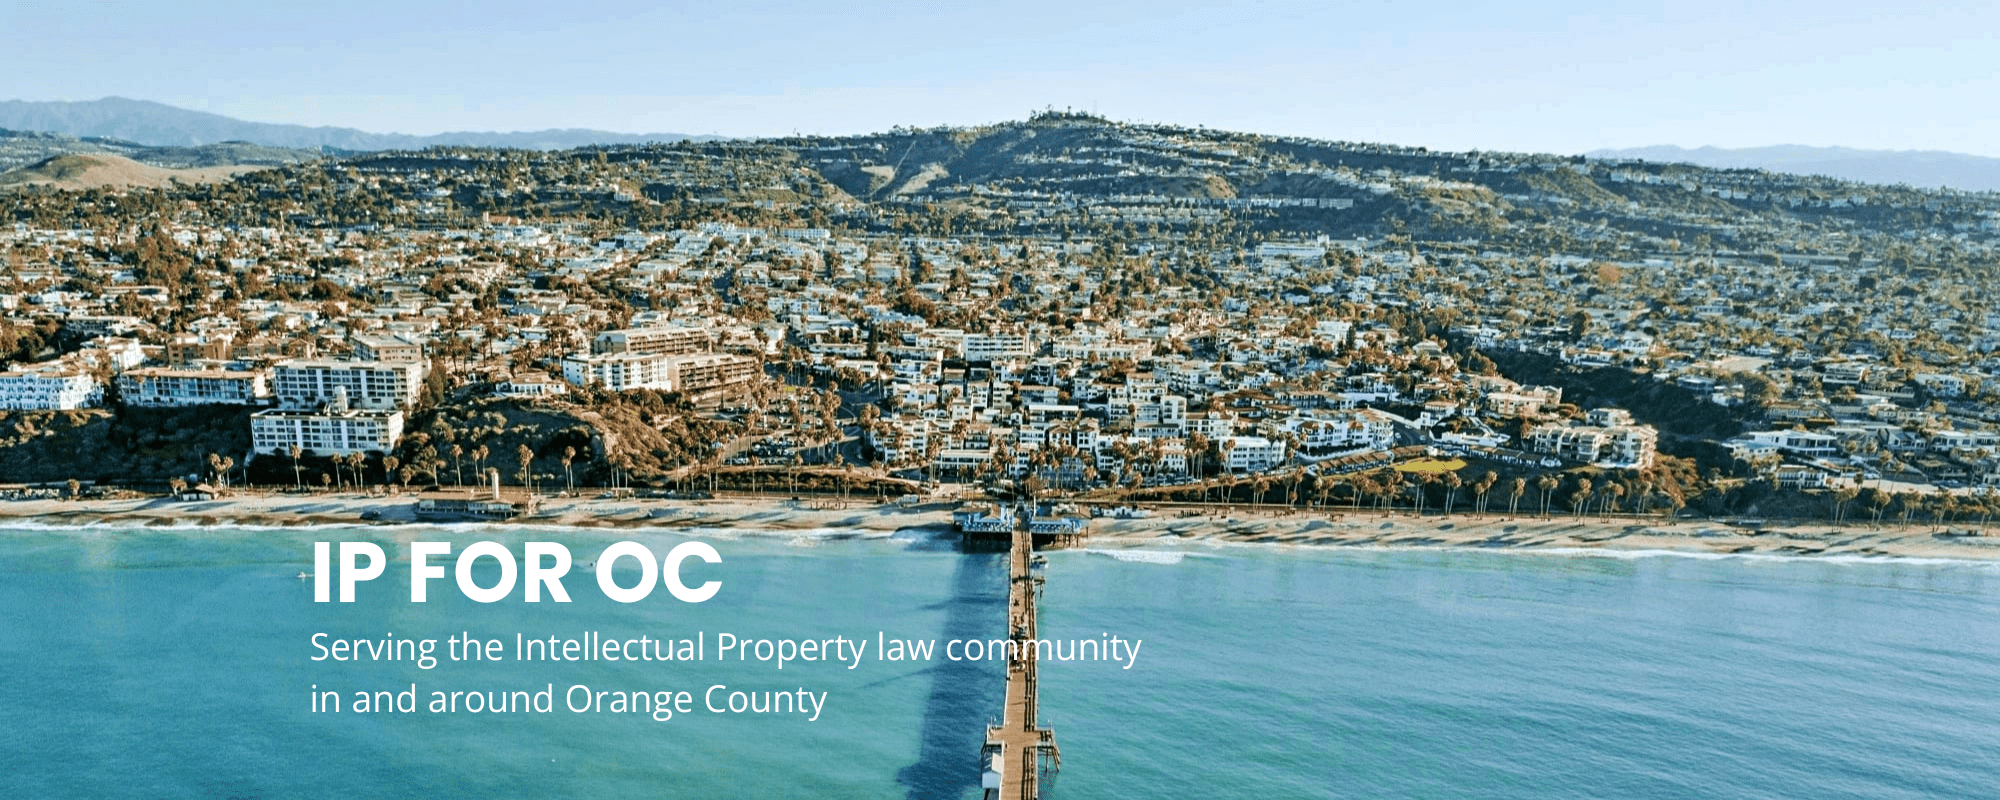 Orange County Intellectual Property Law Association in Orange County, California